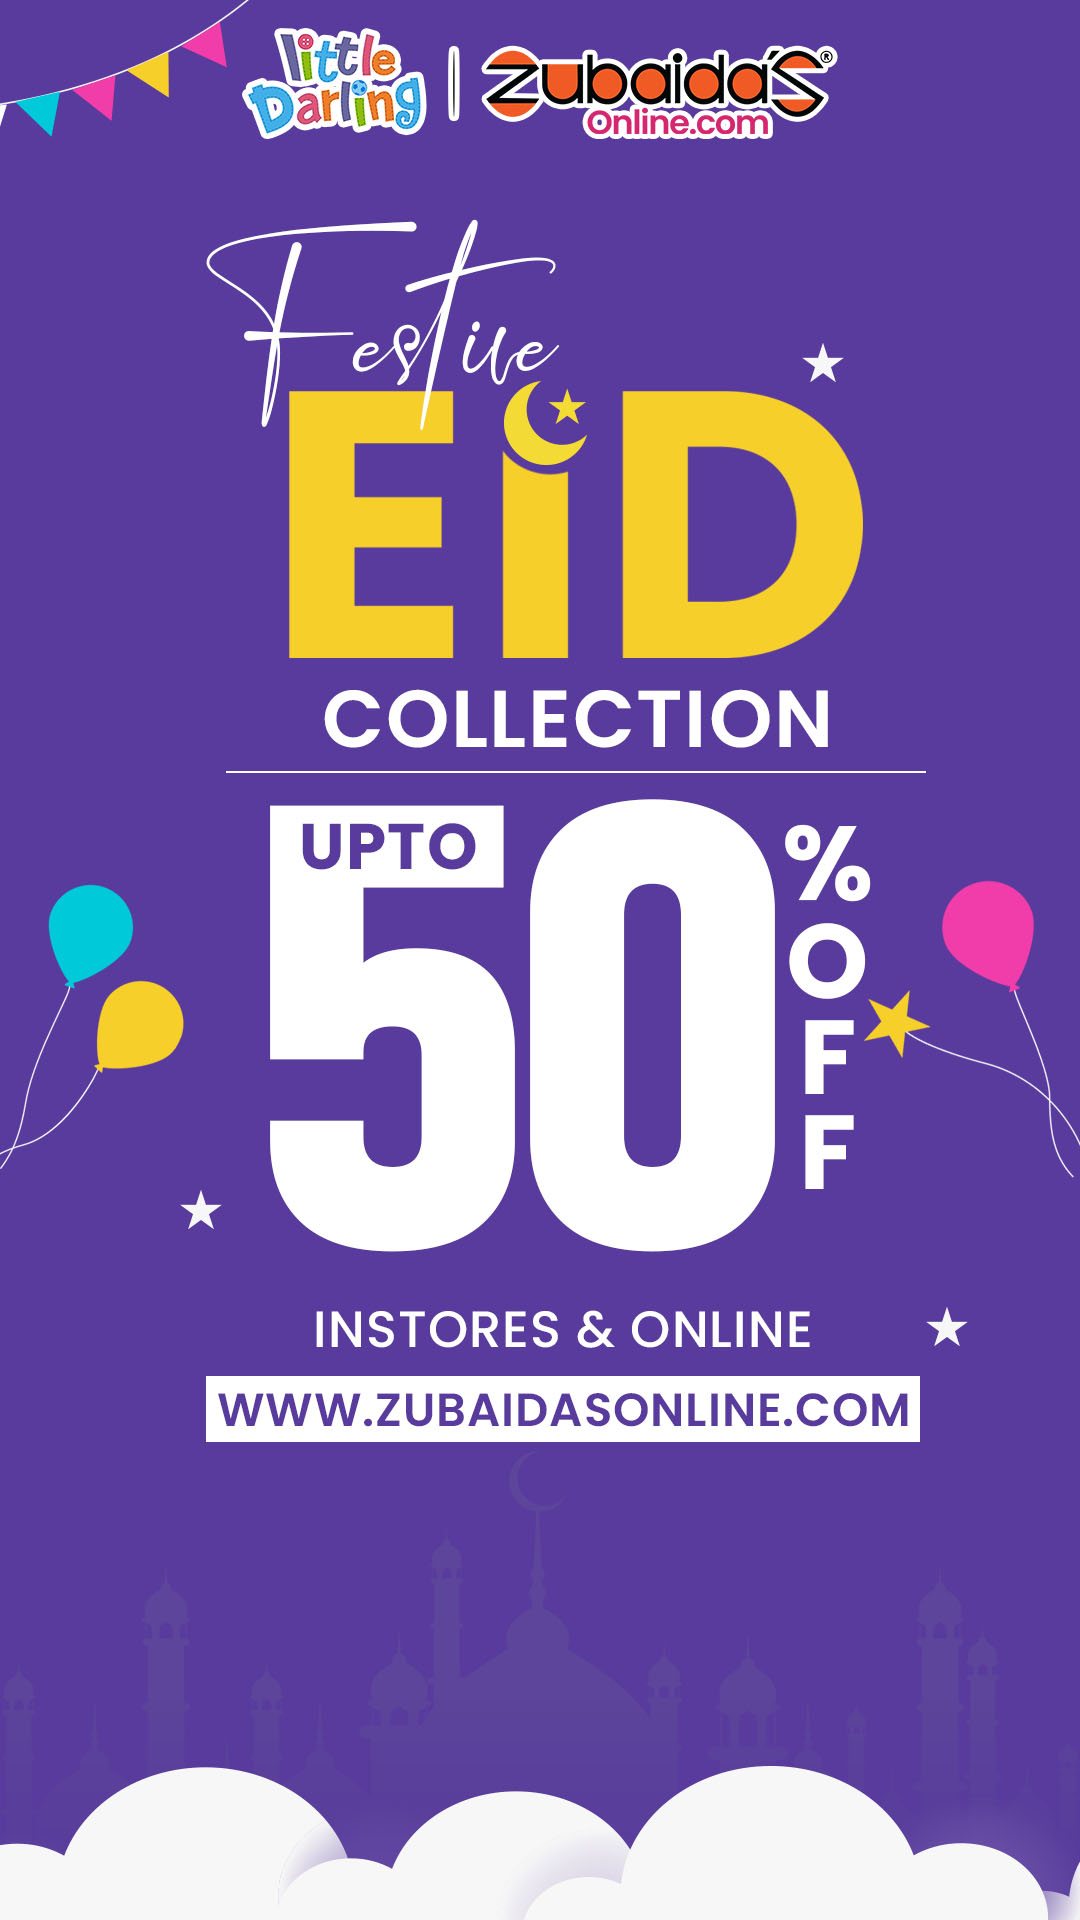 Zubaidas - Fastive Eid  Sale